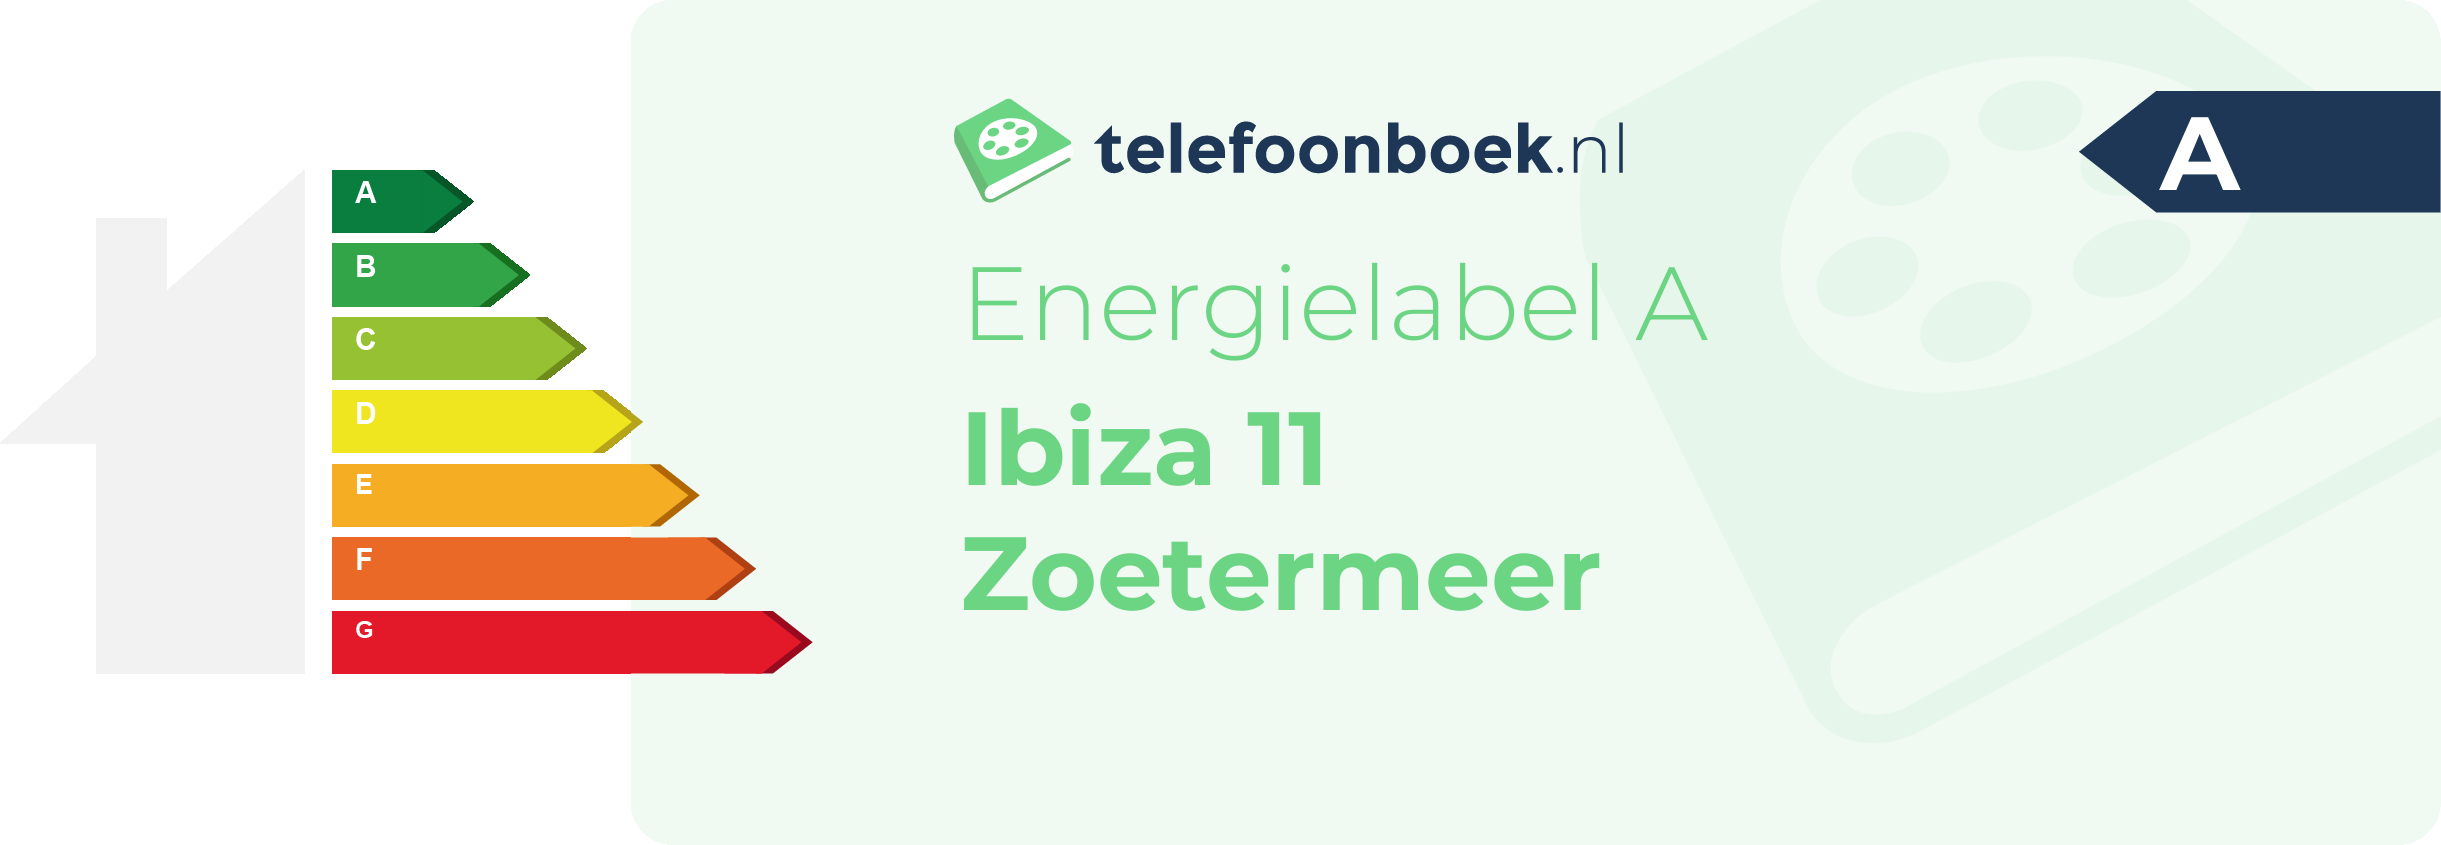 Energielabel Ibiza 11 Zoetermeer